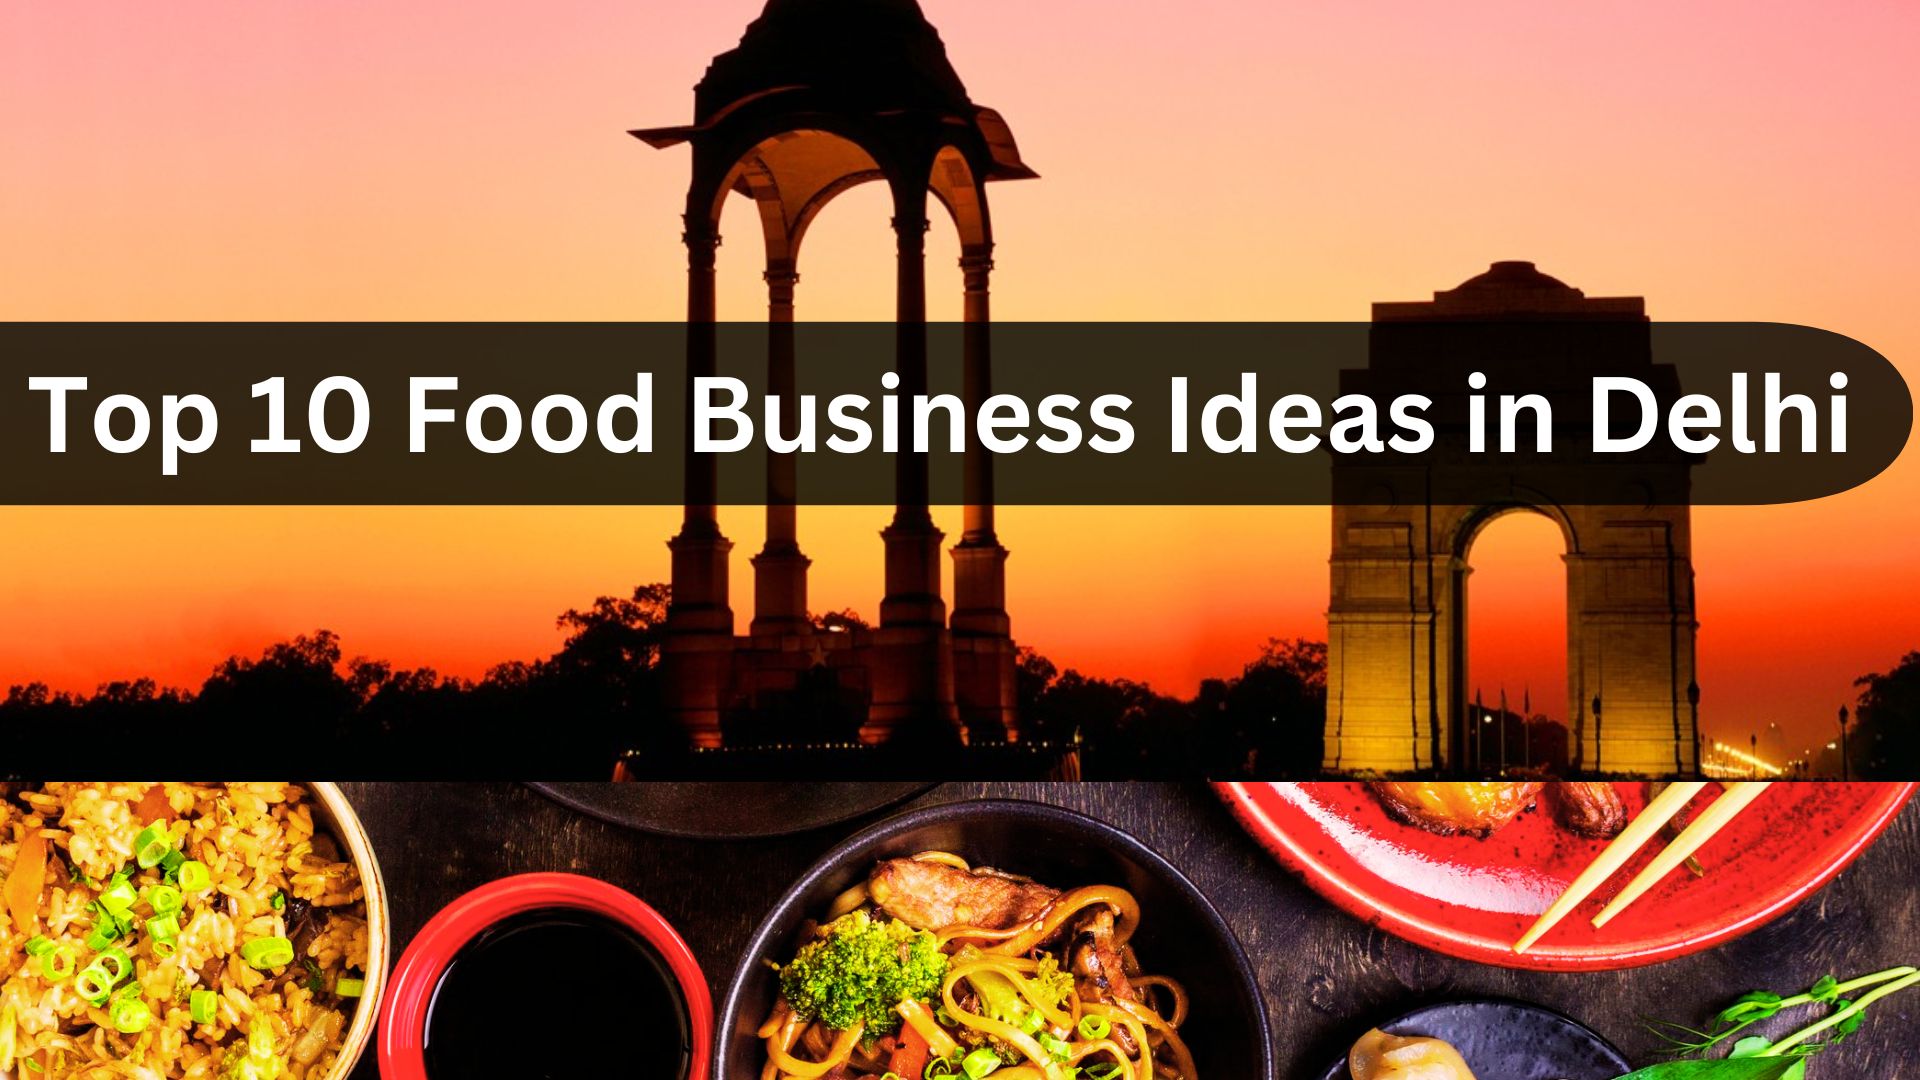 Top 10 Food Business Ideas in Delhi, India